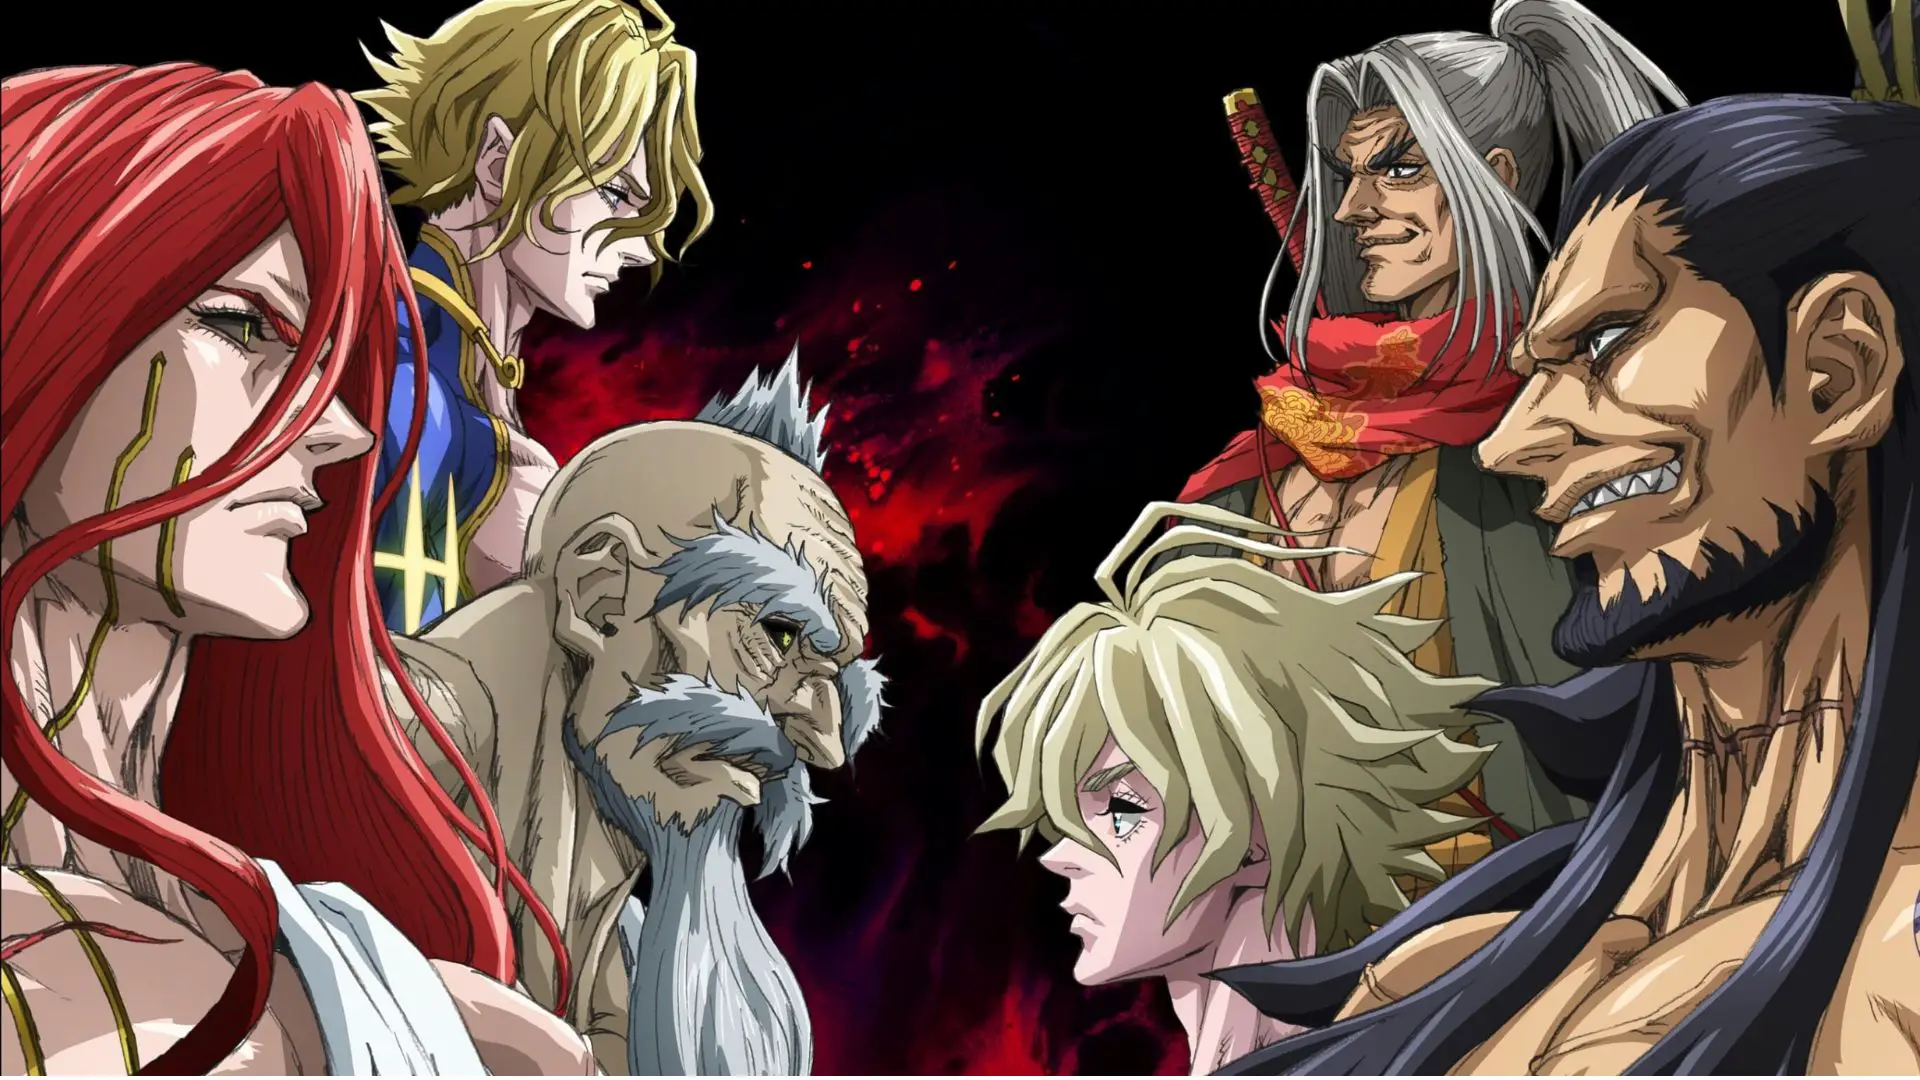 Epic Showdown: 'Record of Ragnarok' Manga Series Unfolds a Mythological Battle Between Gods and Humanity